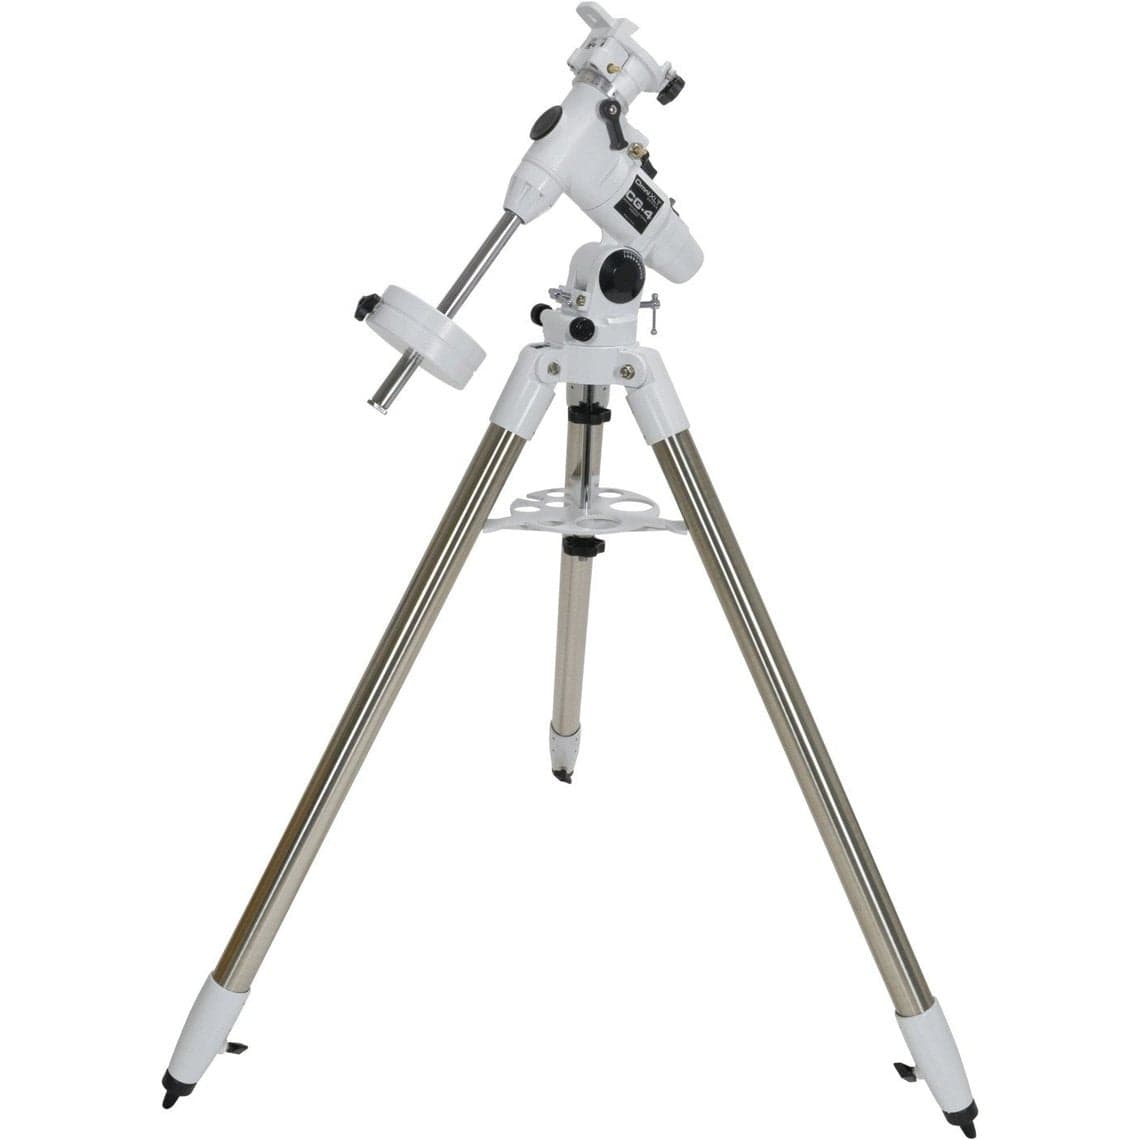 Celestron Mount Celestron Omni CG-4 Telescope Mount and Tripod - 91509